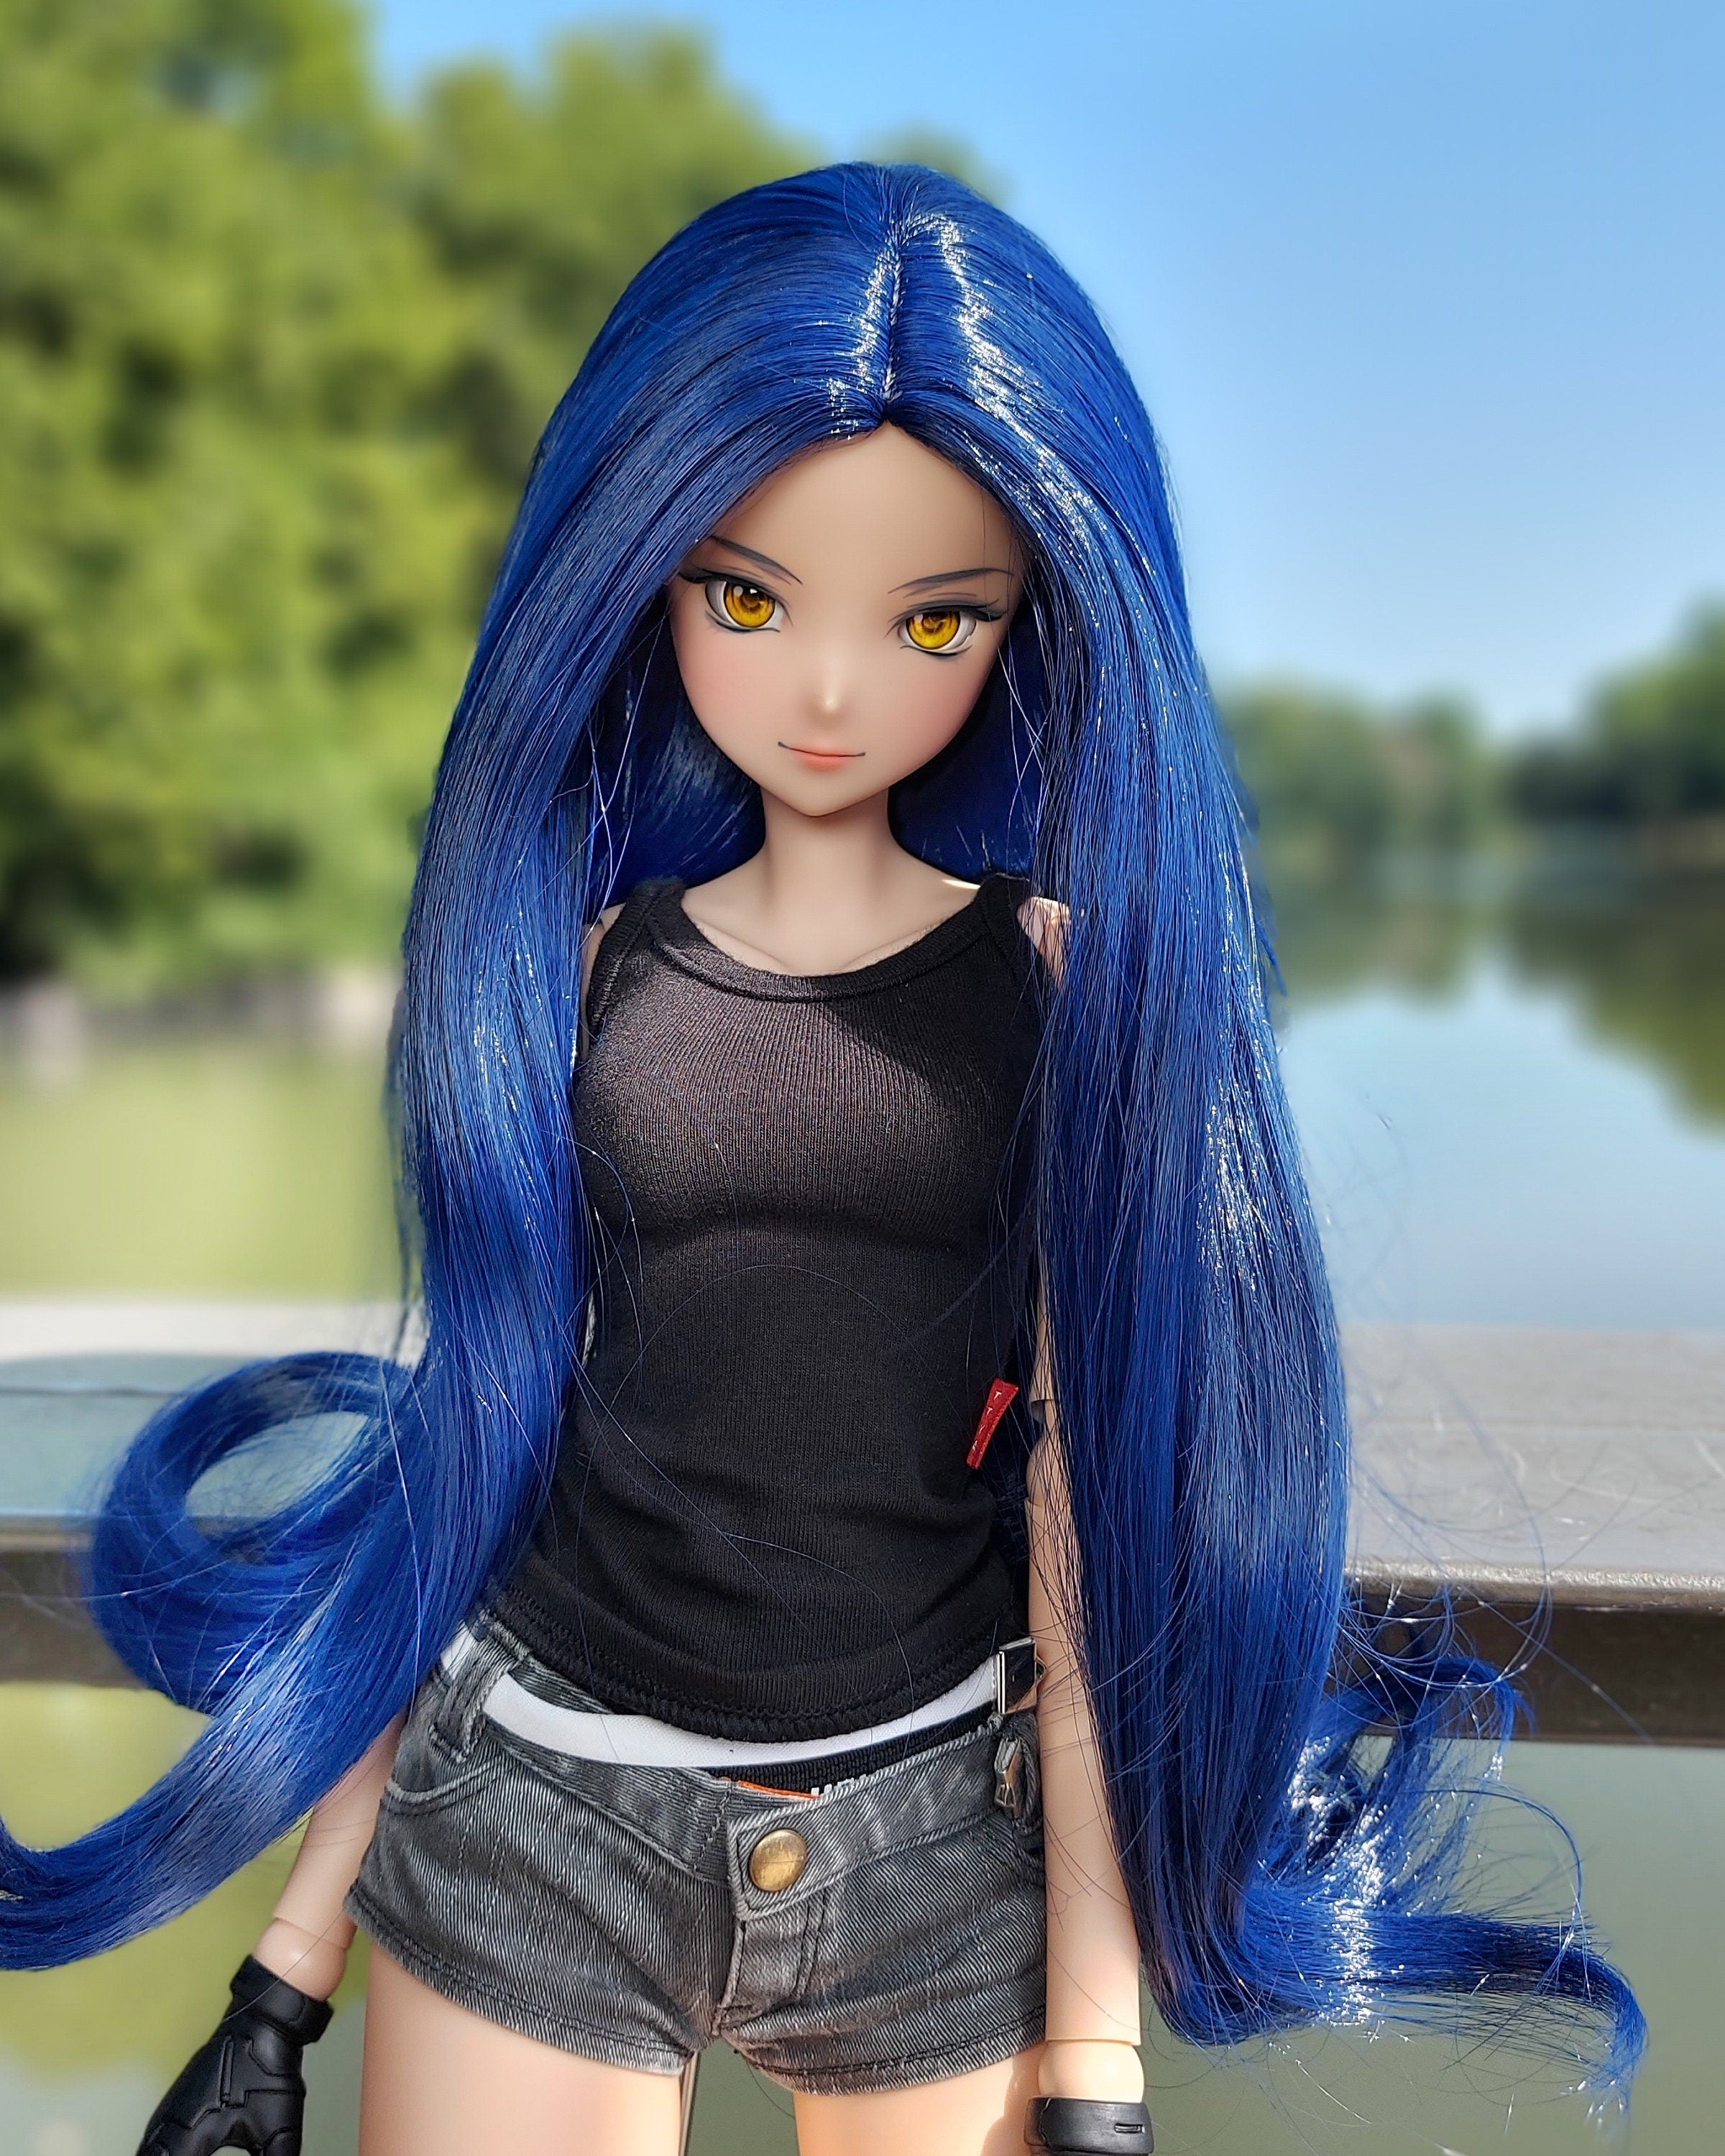 Custom doll Wig for Smart Dolls- "TAN CAPS" 8.5" head size of Bjd, SD, Dollfie Dream dolls deep blue